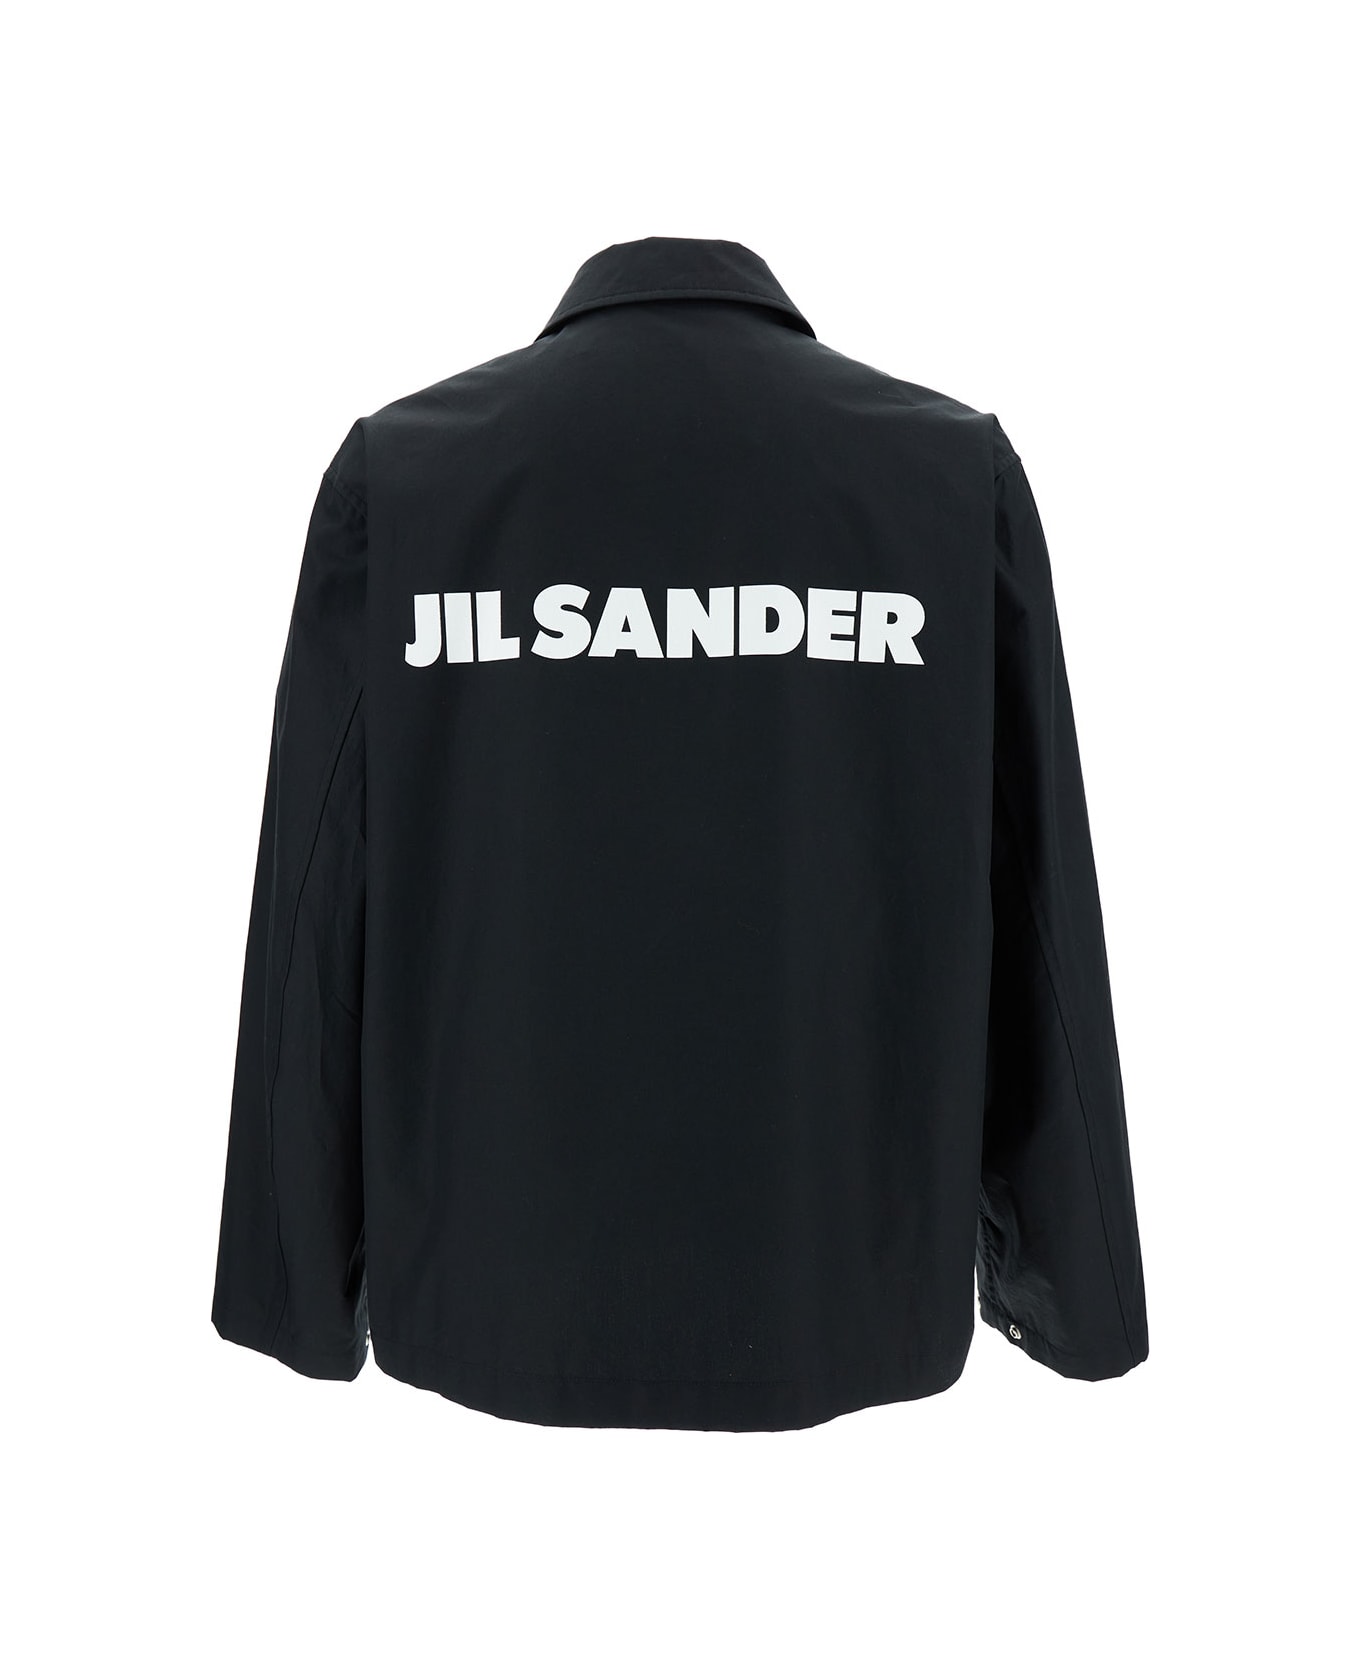 Jil Sander Black Jacket With Contrasting Logo Print At The Back In Cotton Man - Black